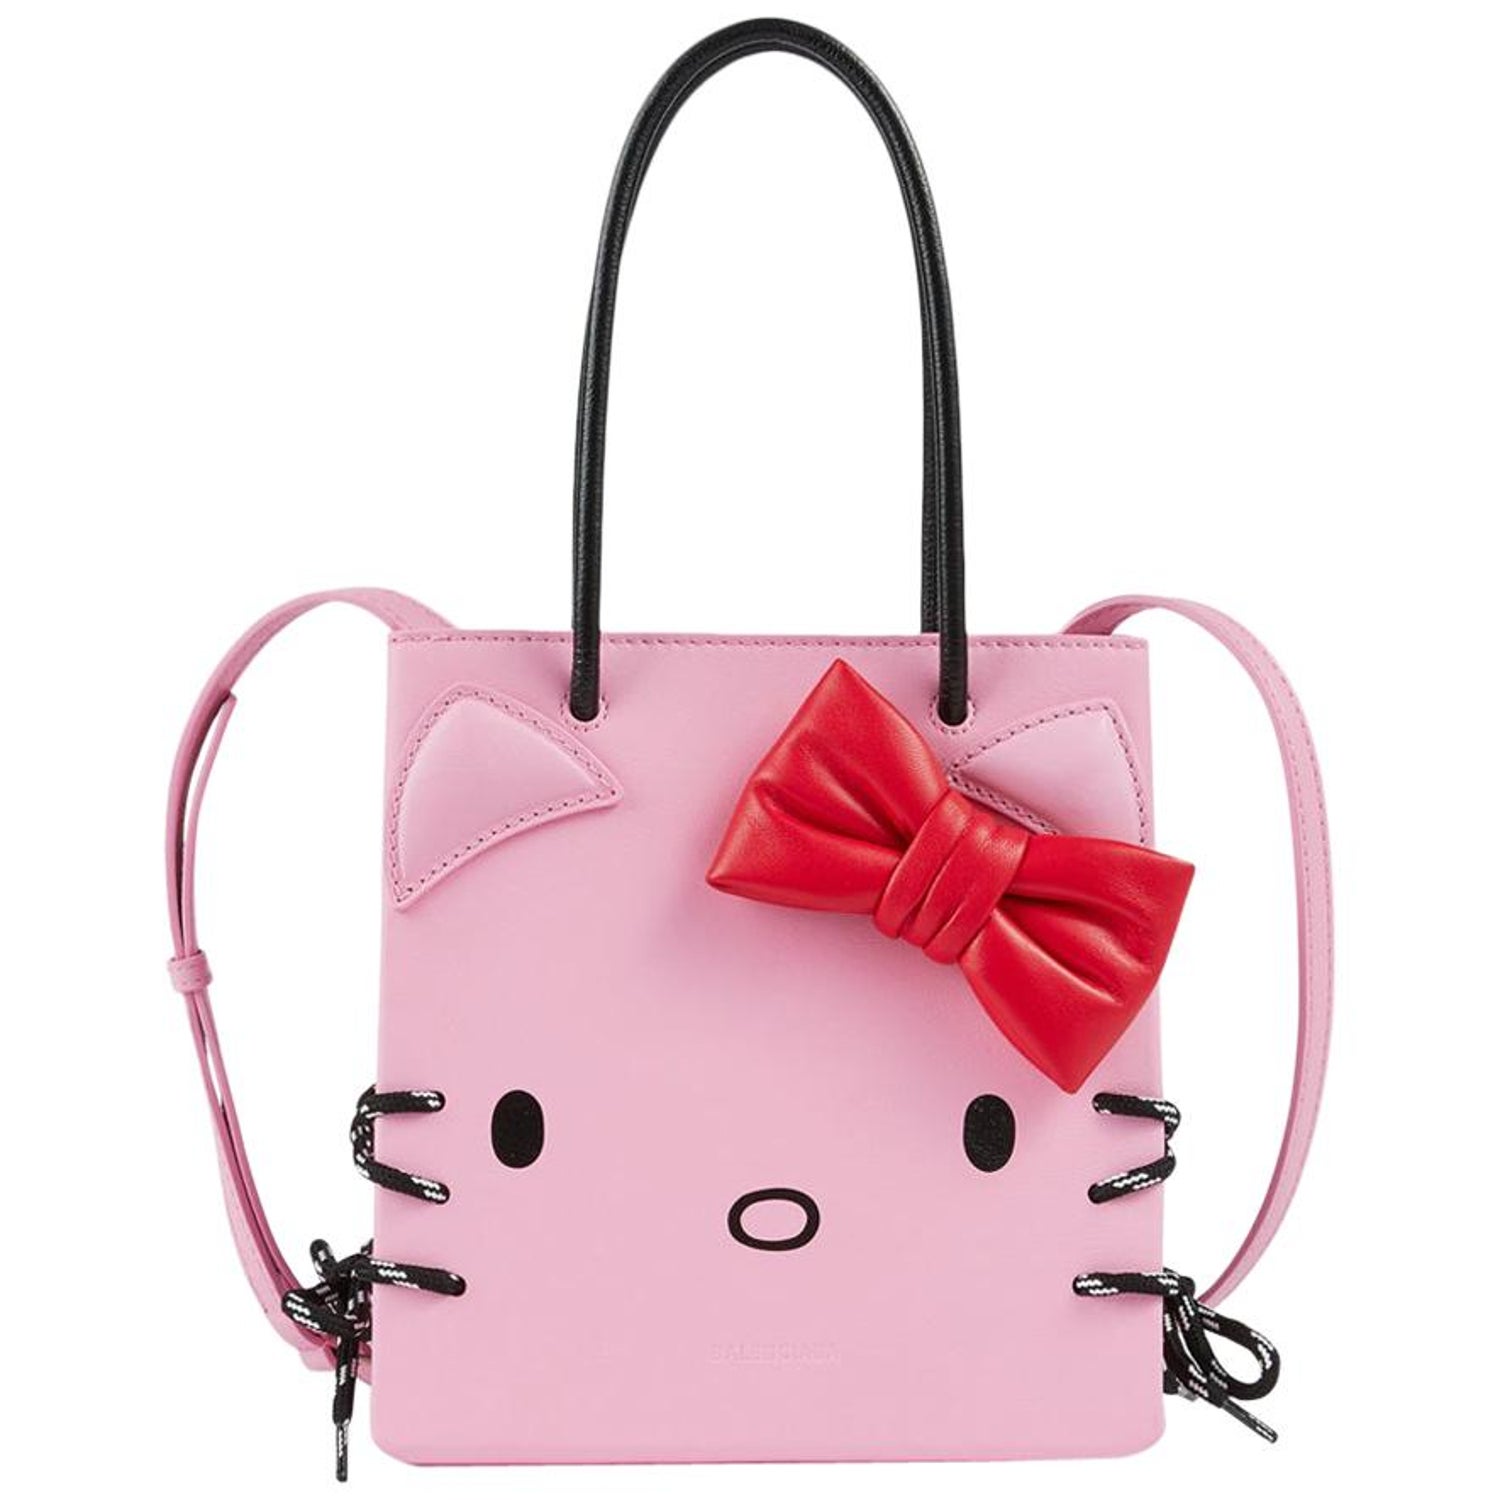 Balenciaga Hello Kitty - For Sale on 1stDibs | balenciaga hello kitty  handbag, balenciaga hello kitty purse, balenciaga bag hello kitty